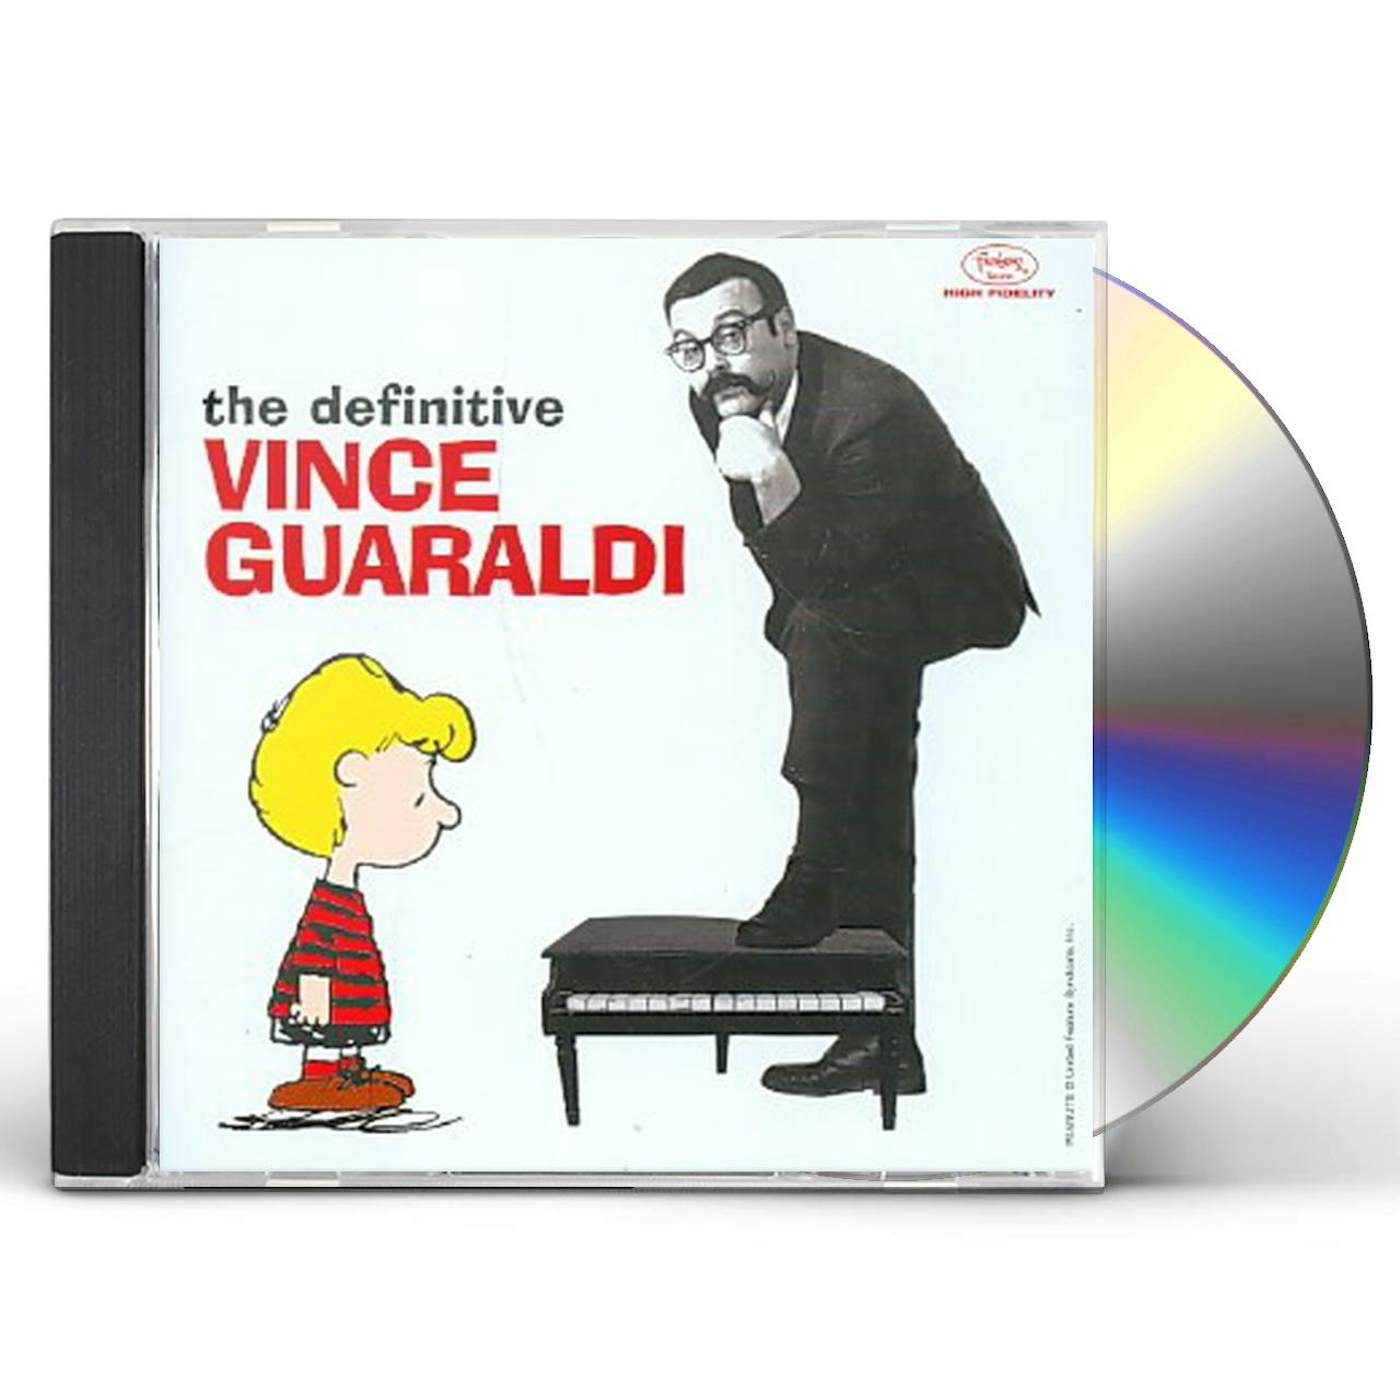 DEFINITIVE VINCE GUARALDI CD